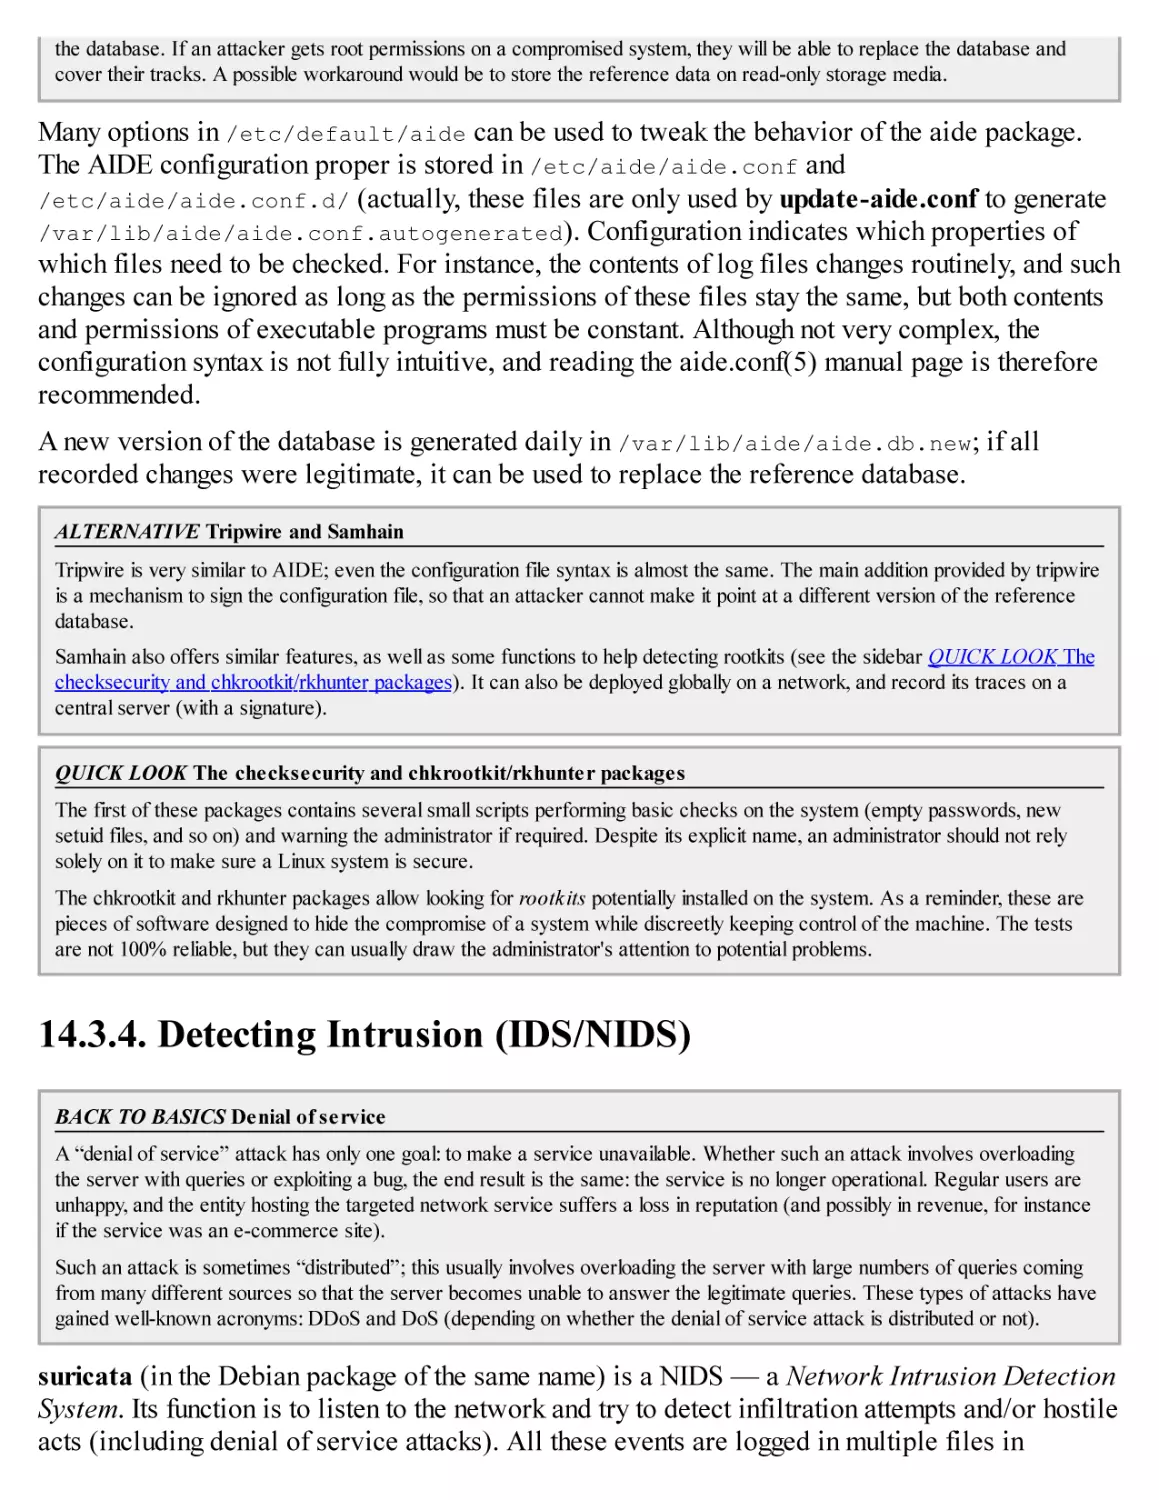 14.3.4. Detecting Intrusion (IDS/NIDS)